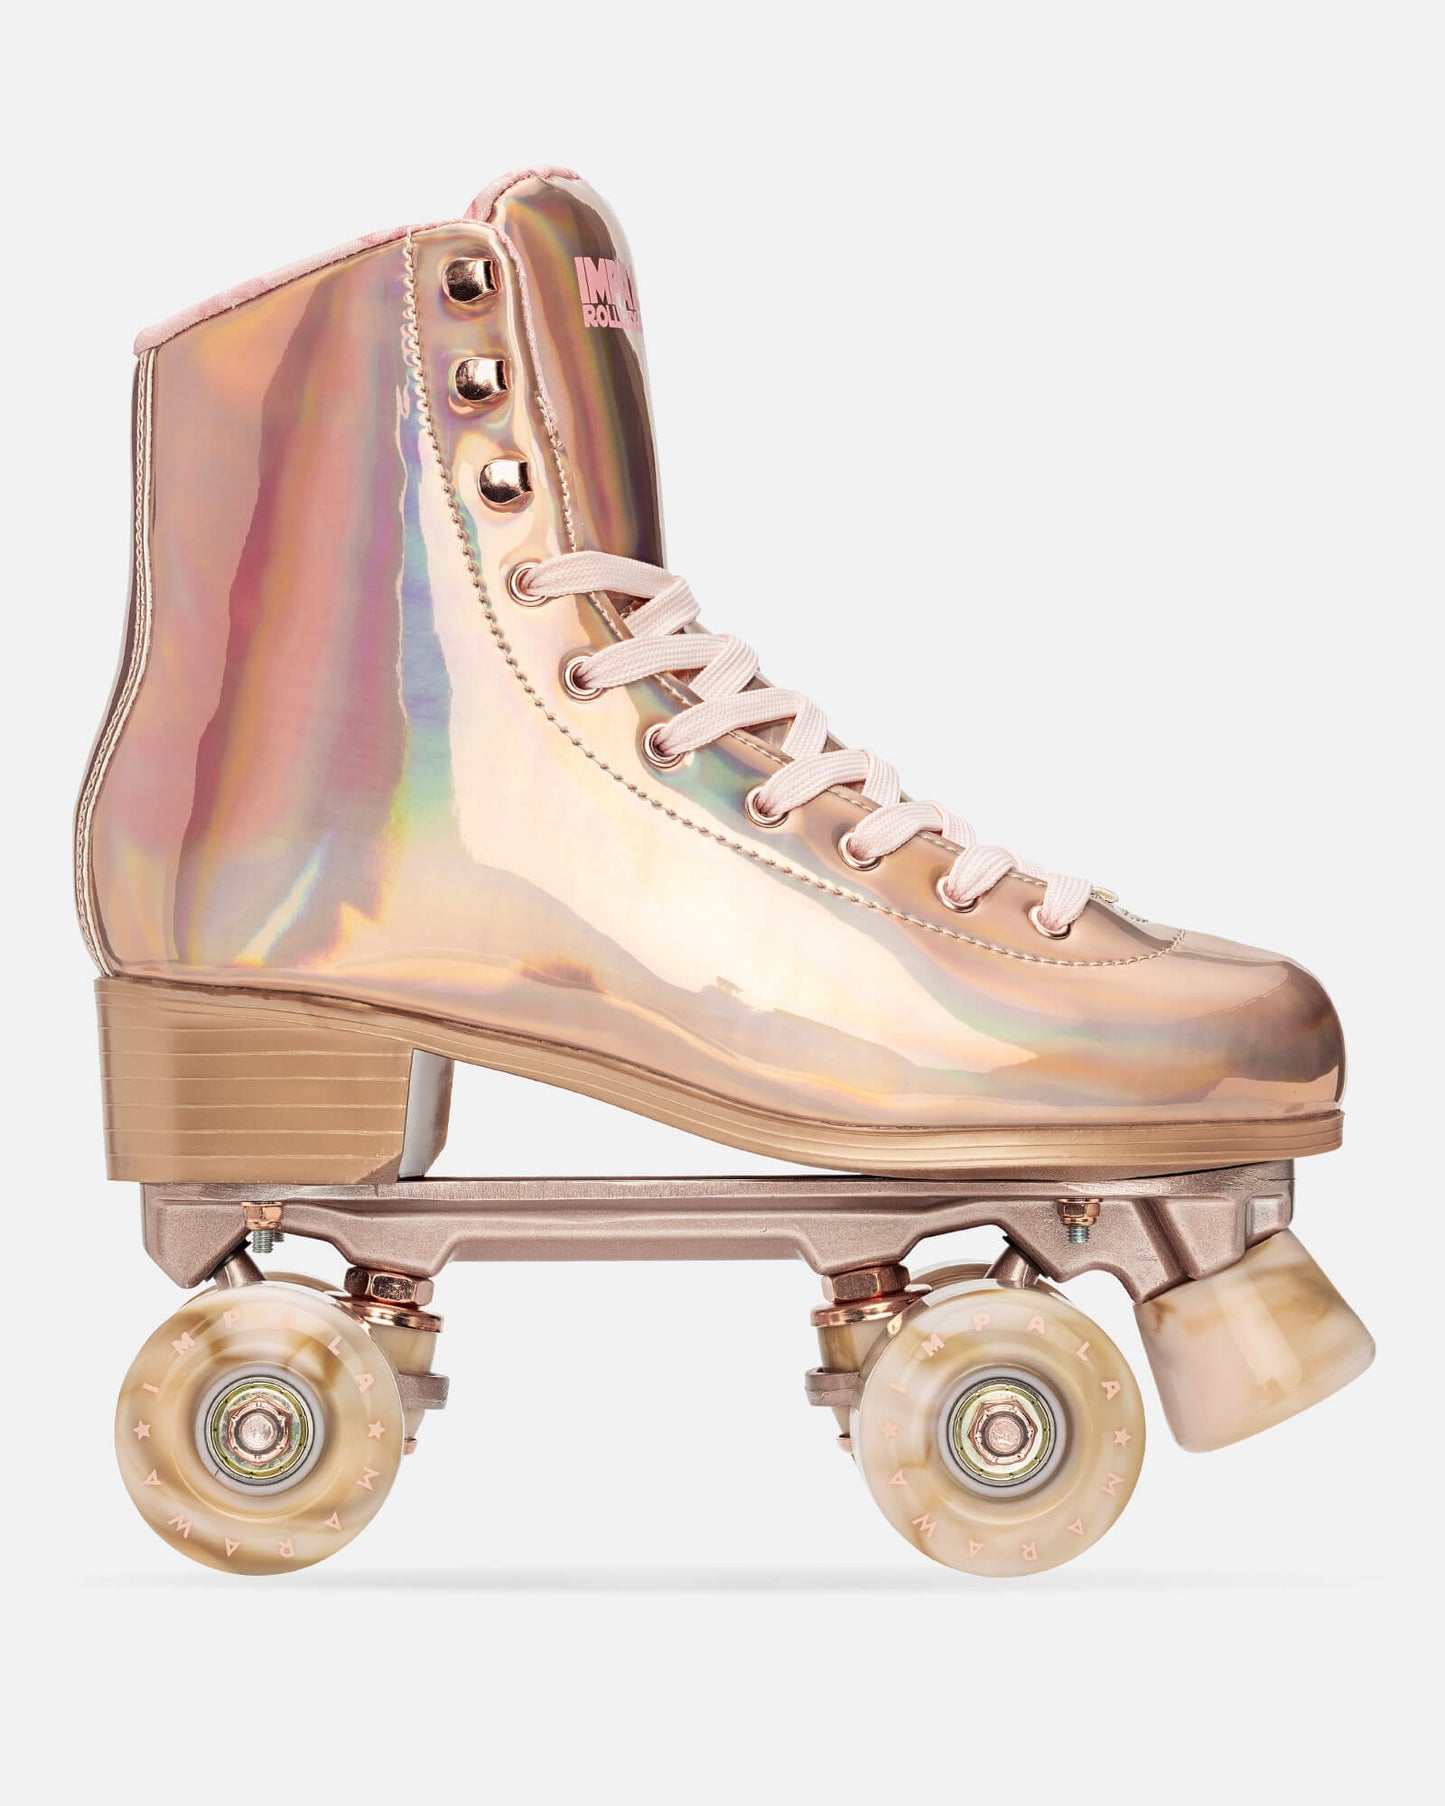 Impala Roller Skates Impala Roller Skates - Marawa Rose Gold in Marawa Rose Gold